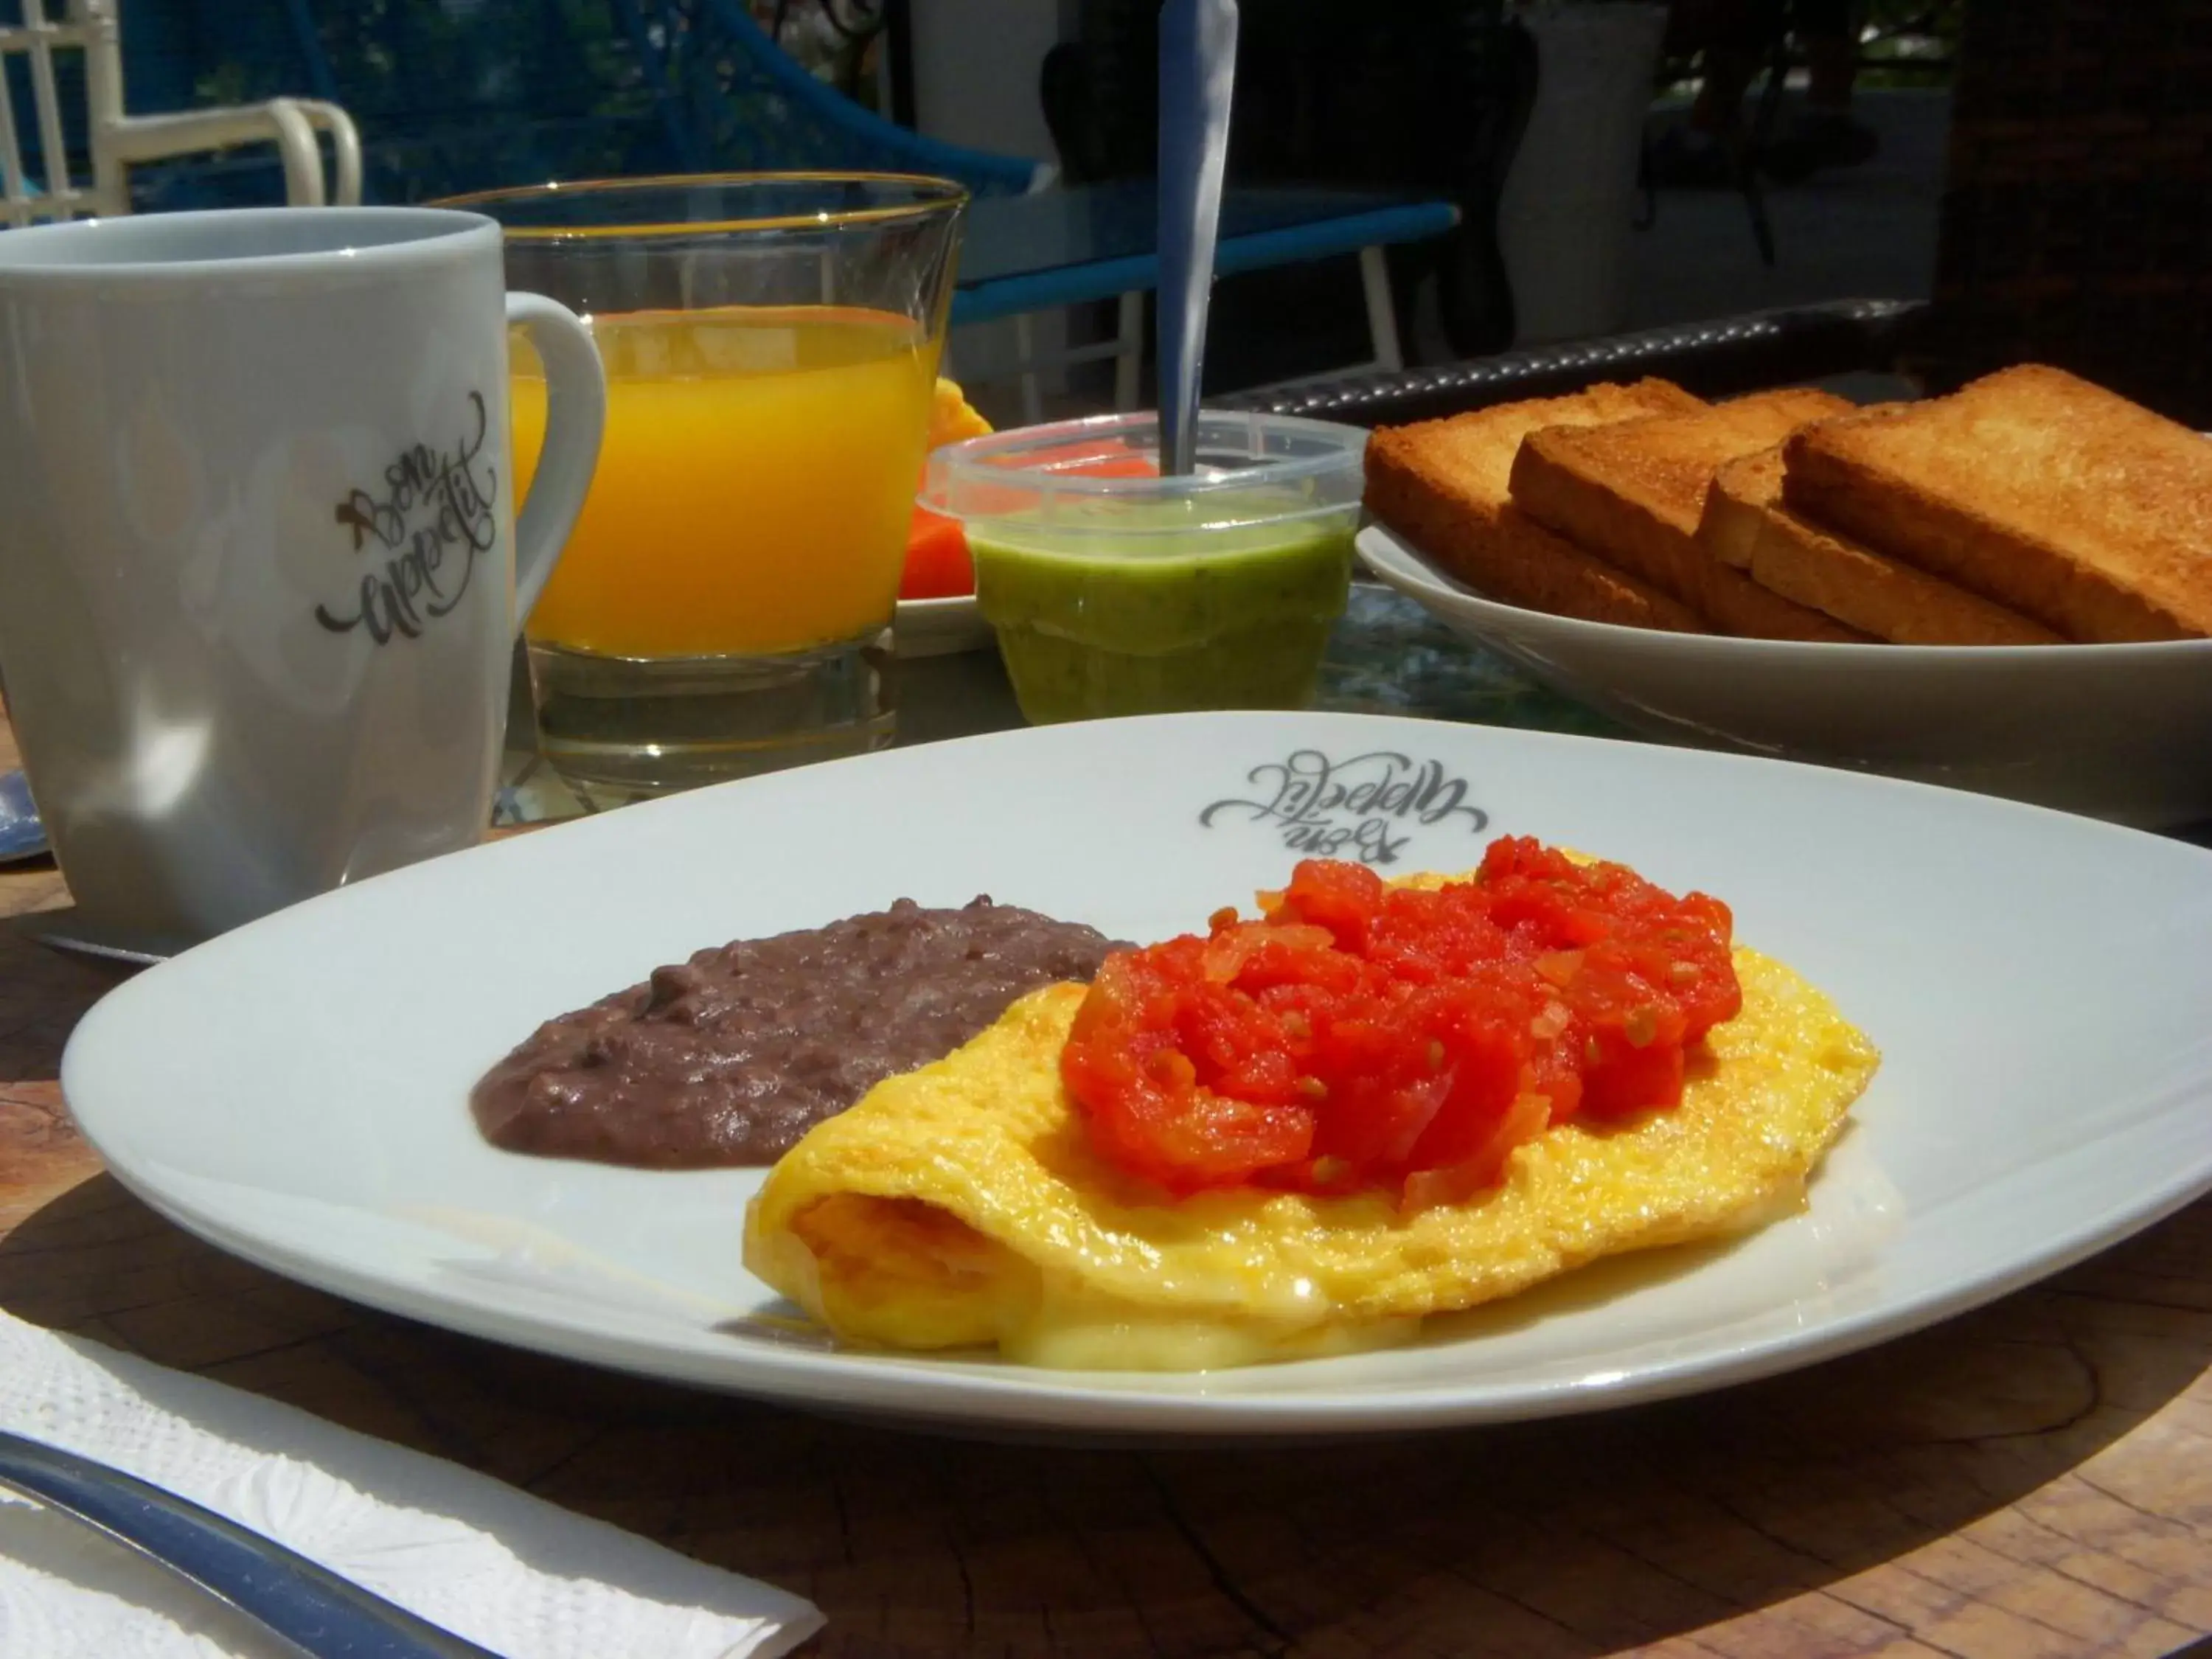 Breakfast in Villa Antilope